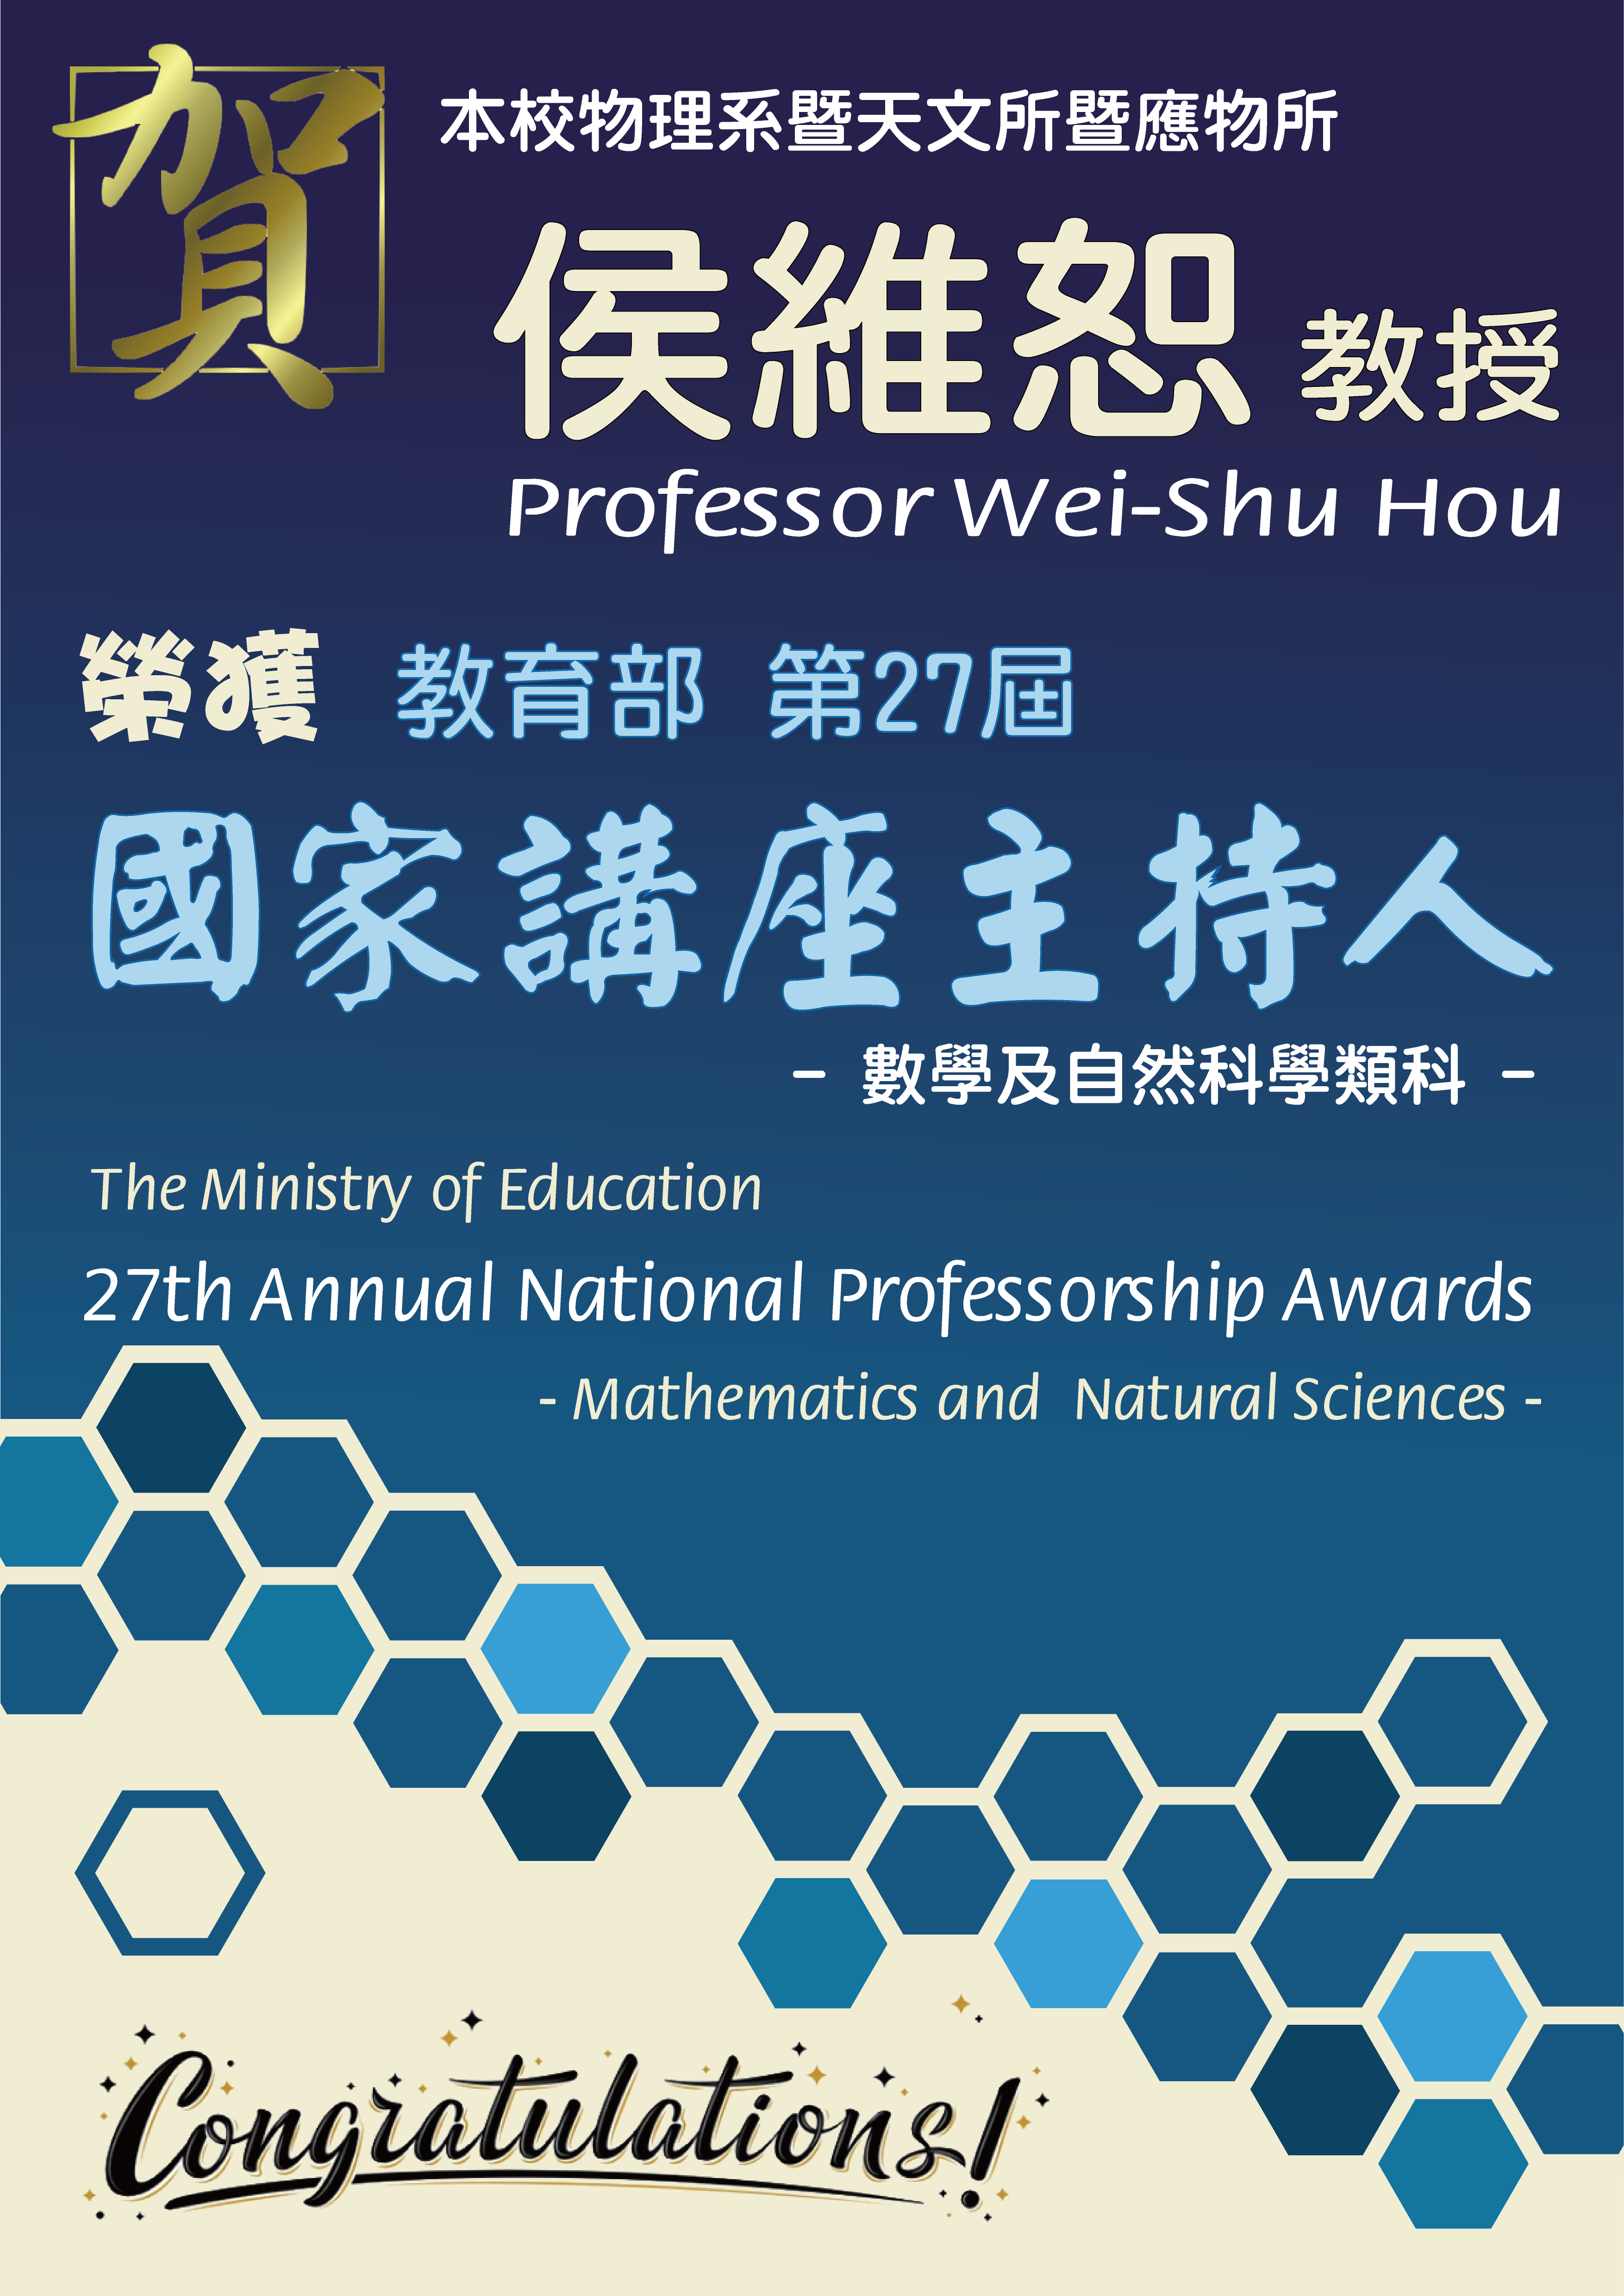 《賀》本系 侯維恕 教授 Prof. Wei-Shu Hou 榮獲 教育部 第27屆《國家講座主持人》- 數學及自然科學類科 (The Ministry of Education's 27th Annual National Professorship Awards - Mathematics and Natural Sciences)